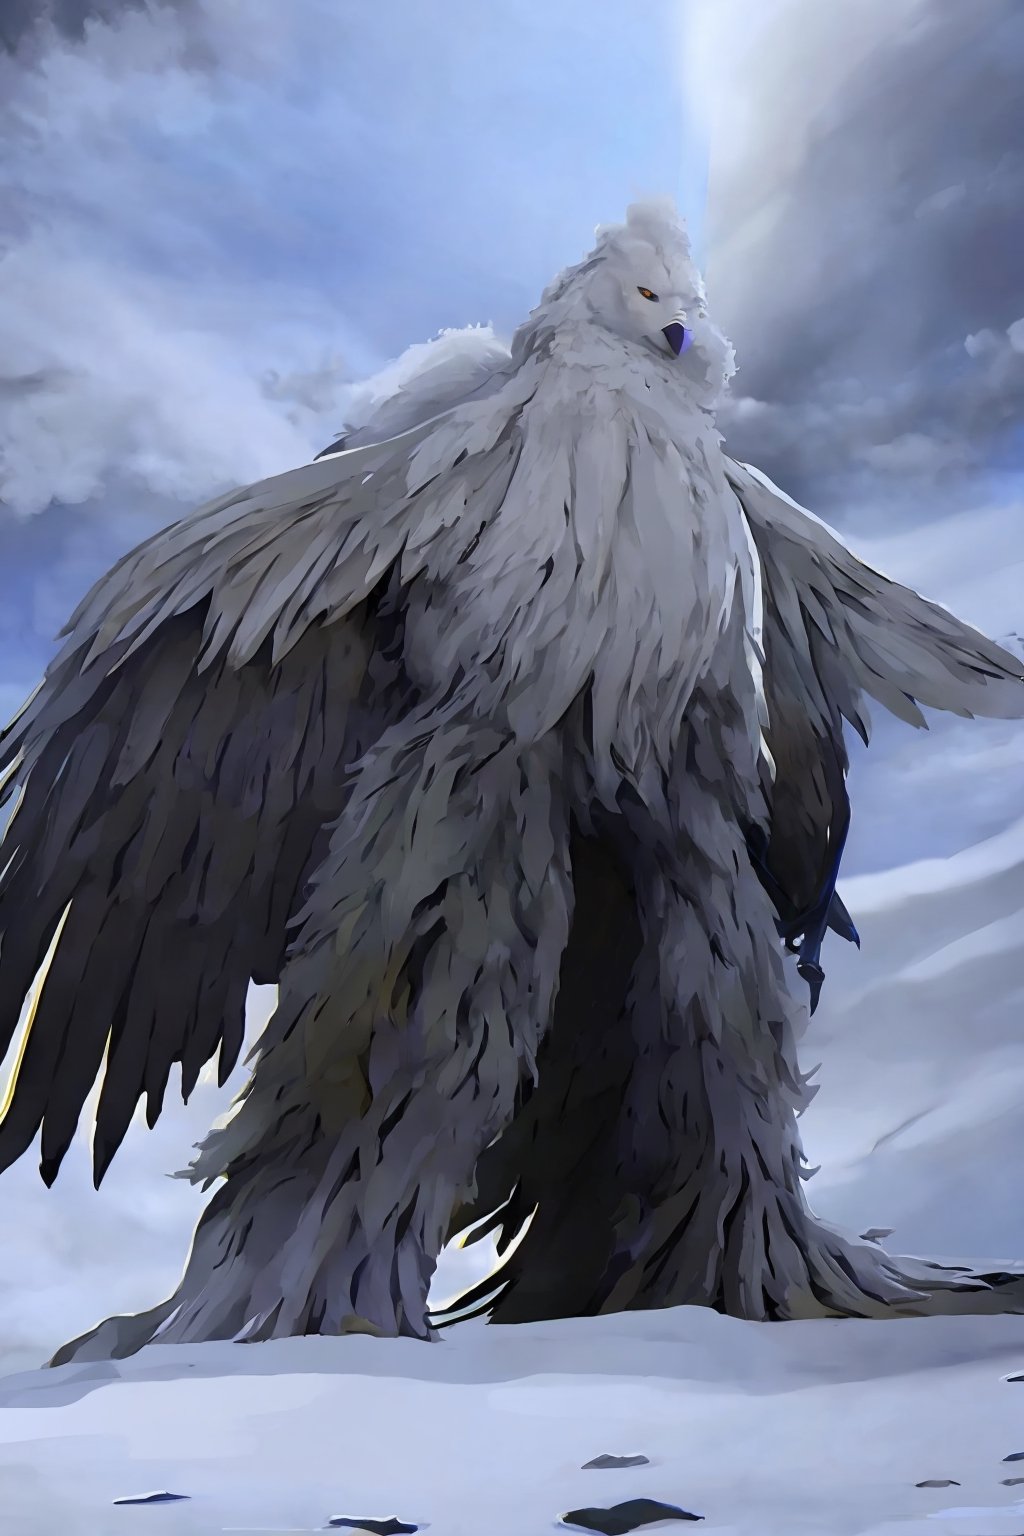 Opium bird, standing, feathers, white feathers, bird, birdman, humanoid, bird head, with extremely long beak, long beak, long mouth, full body, bird legs, bird arms, sinister, terrifying, beautiful , ragged, wide body, fat

High quality, HD, 4kHD, cinematic, atmospheric, realistic, ultra-realistic
snow, mountain, cloudy, gray sky, dark clouds
Detail,lora:largebulg1-000012:1,AIDA_NH_humans,Pixel art,lora:largebulg1-000012:1